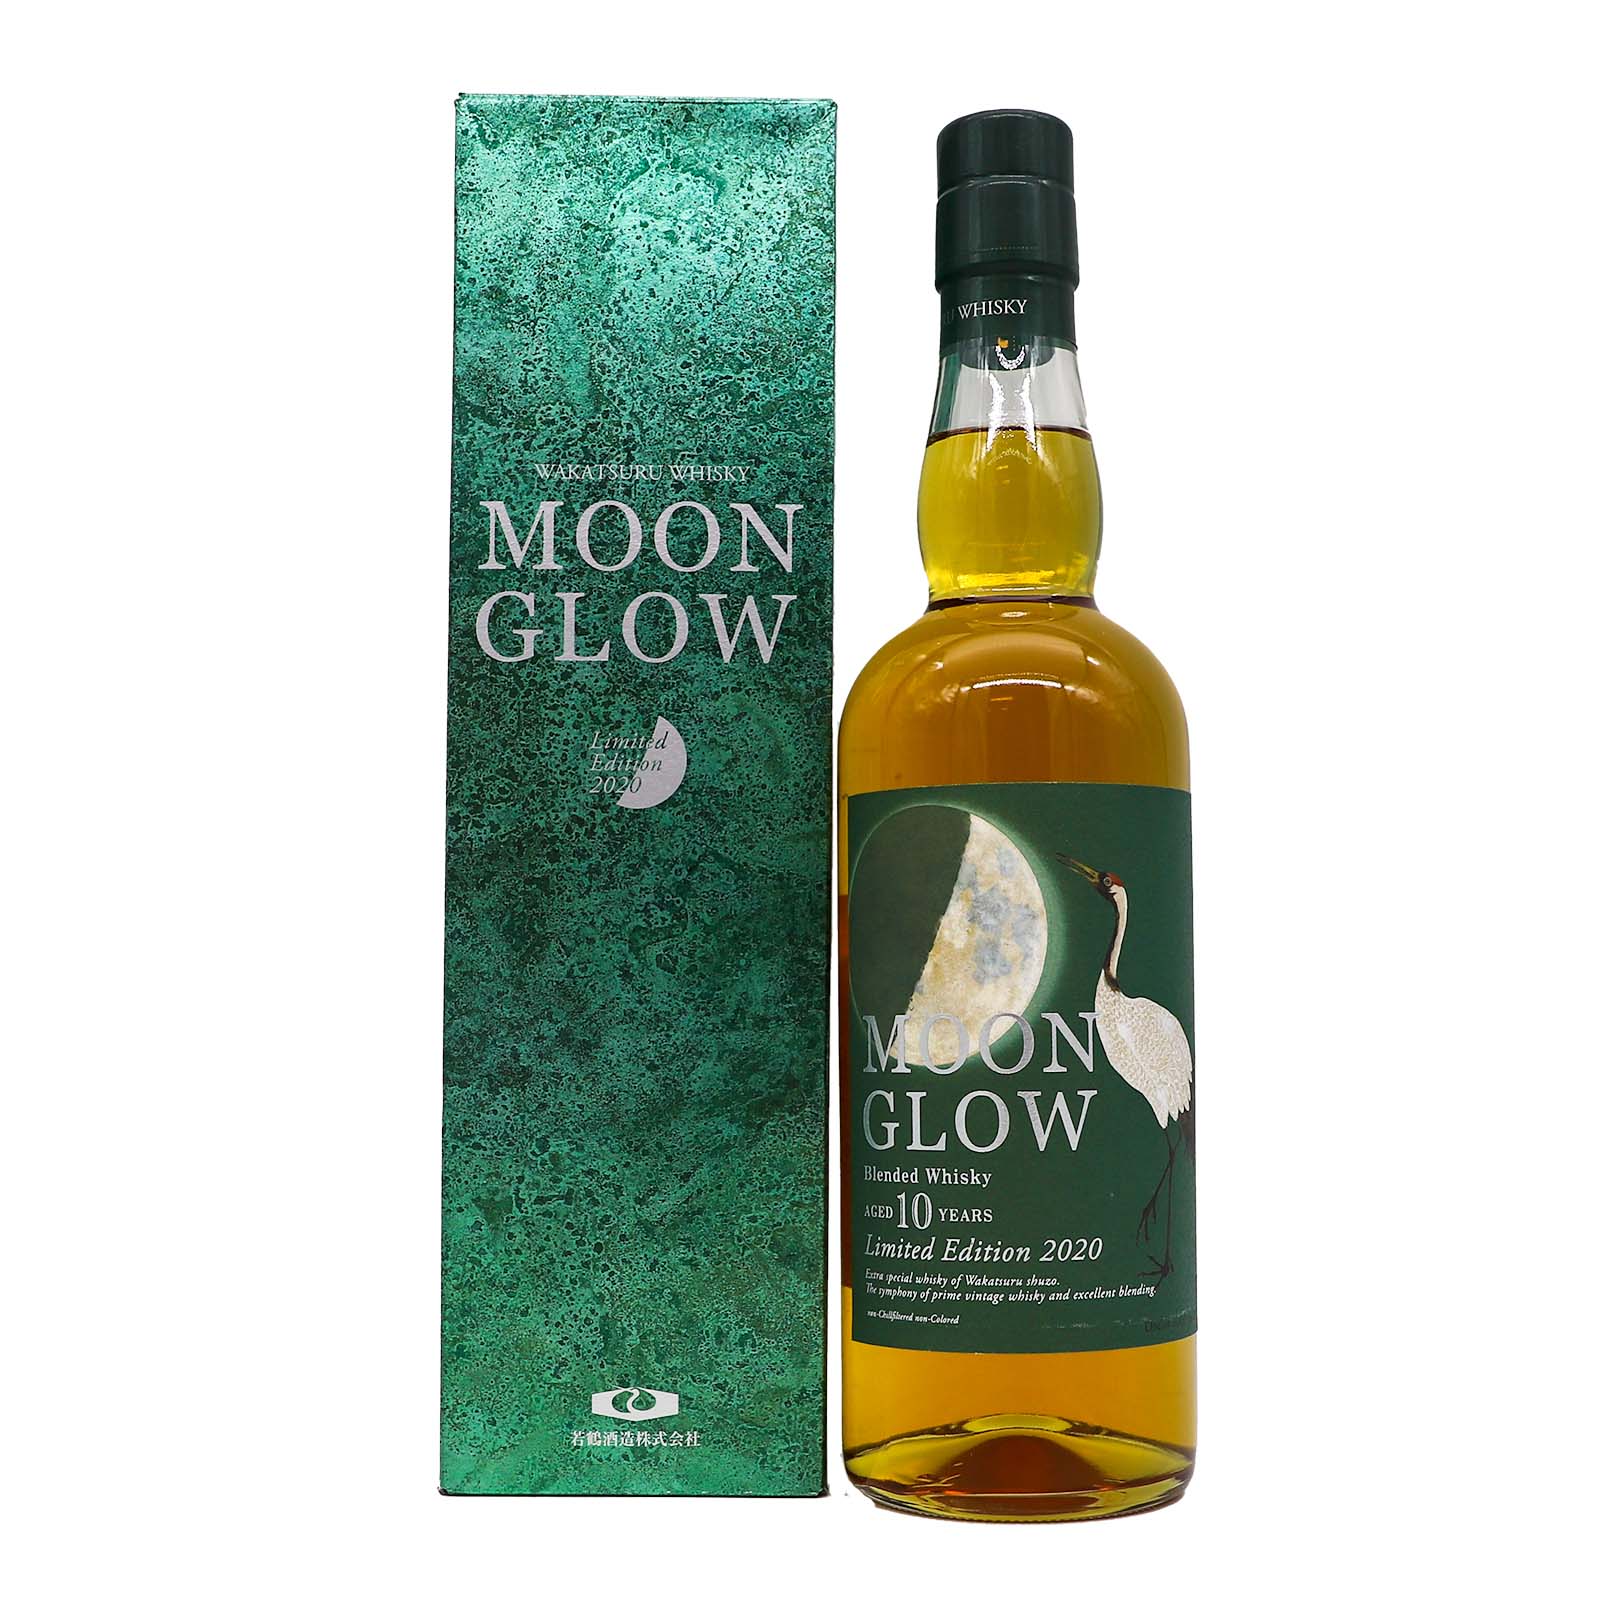 Wakatsuru Saburomaru Distillery Moon Glow Limited Edition 2020 Japanese Whisky 700ml